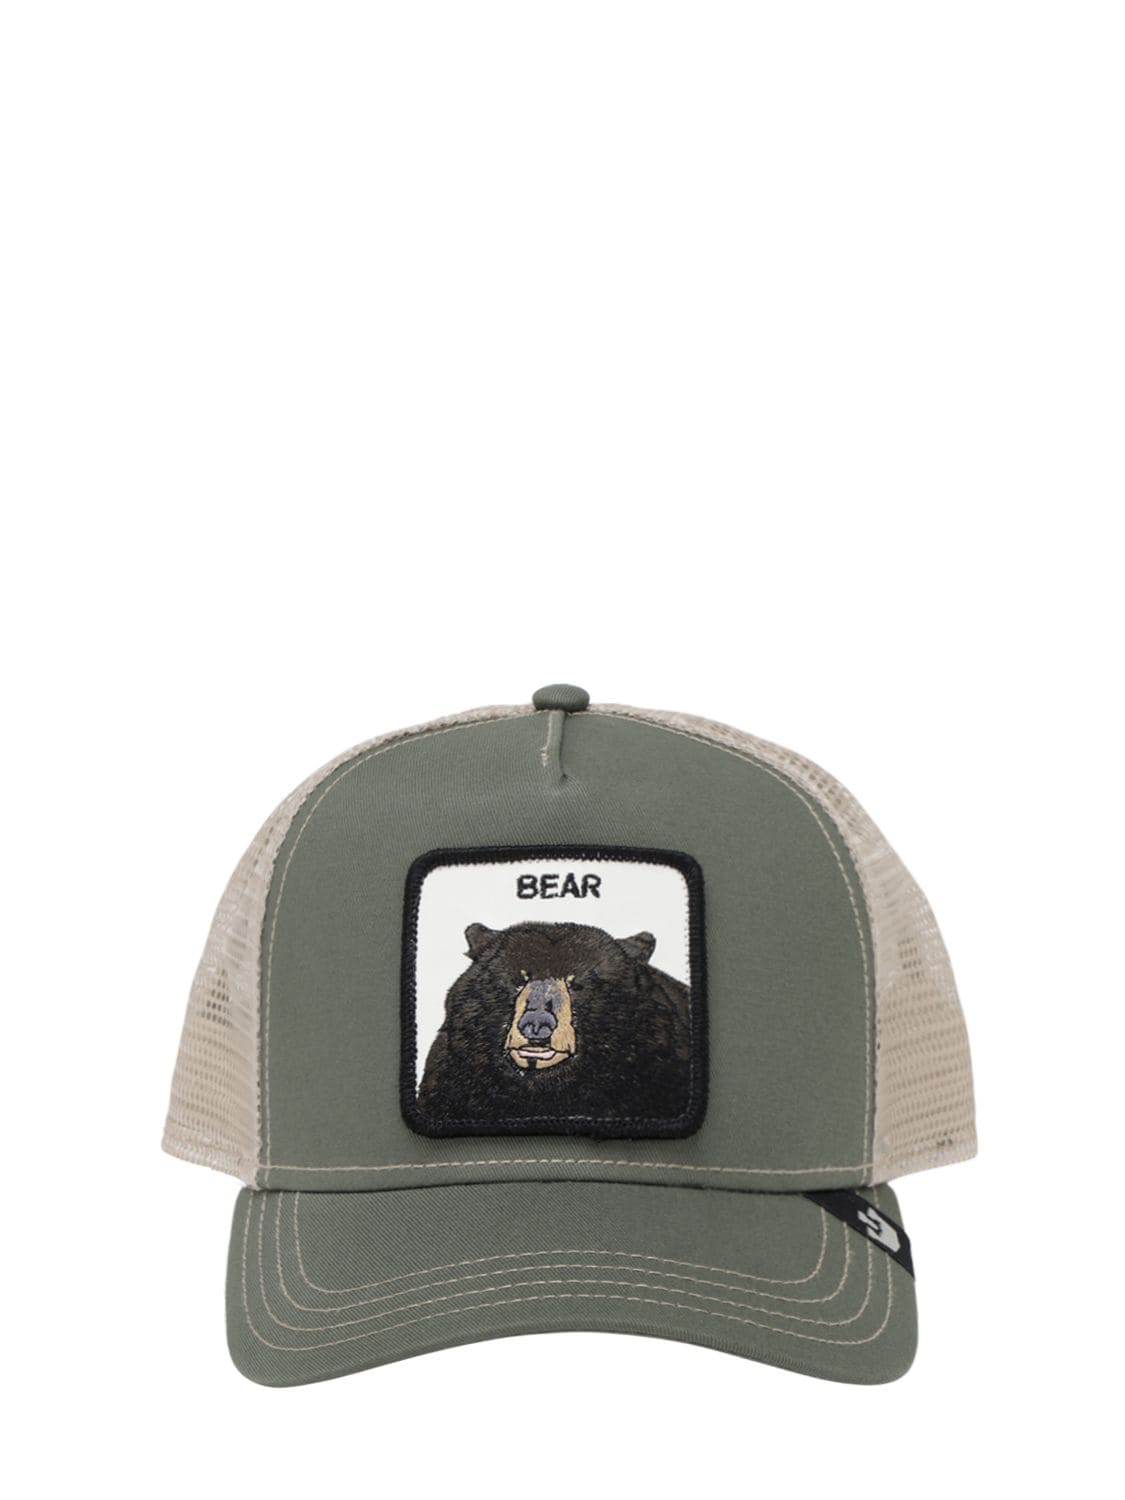 Goorin Bros Drew Bear Patch Trucker Hat In Green